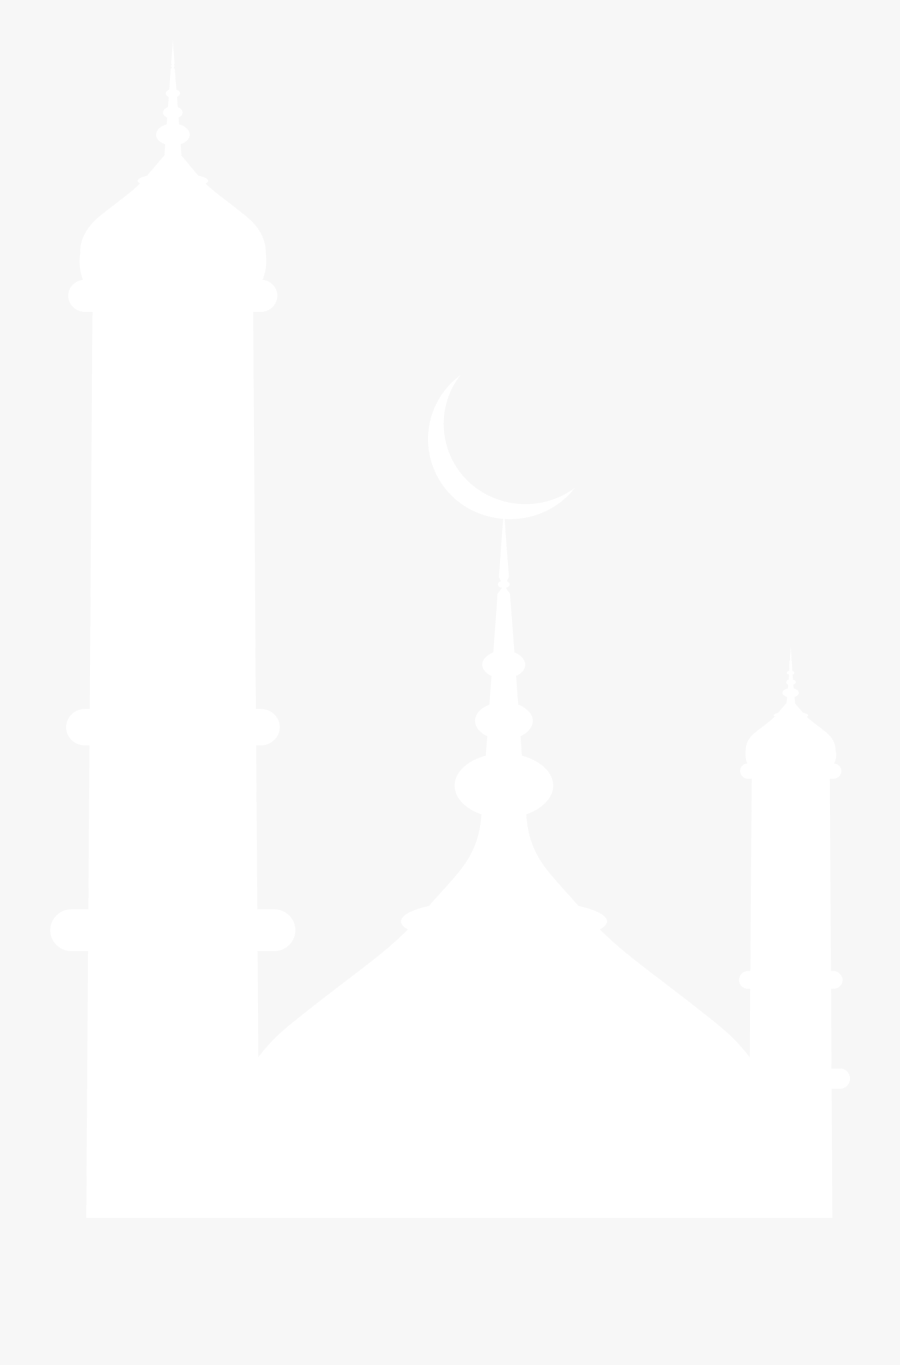 Clip Art Black And White Minimalist - Ramadan Kareem Greeting Cards, Transparent Clipart